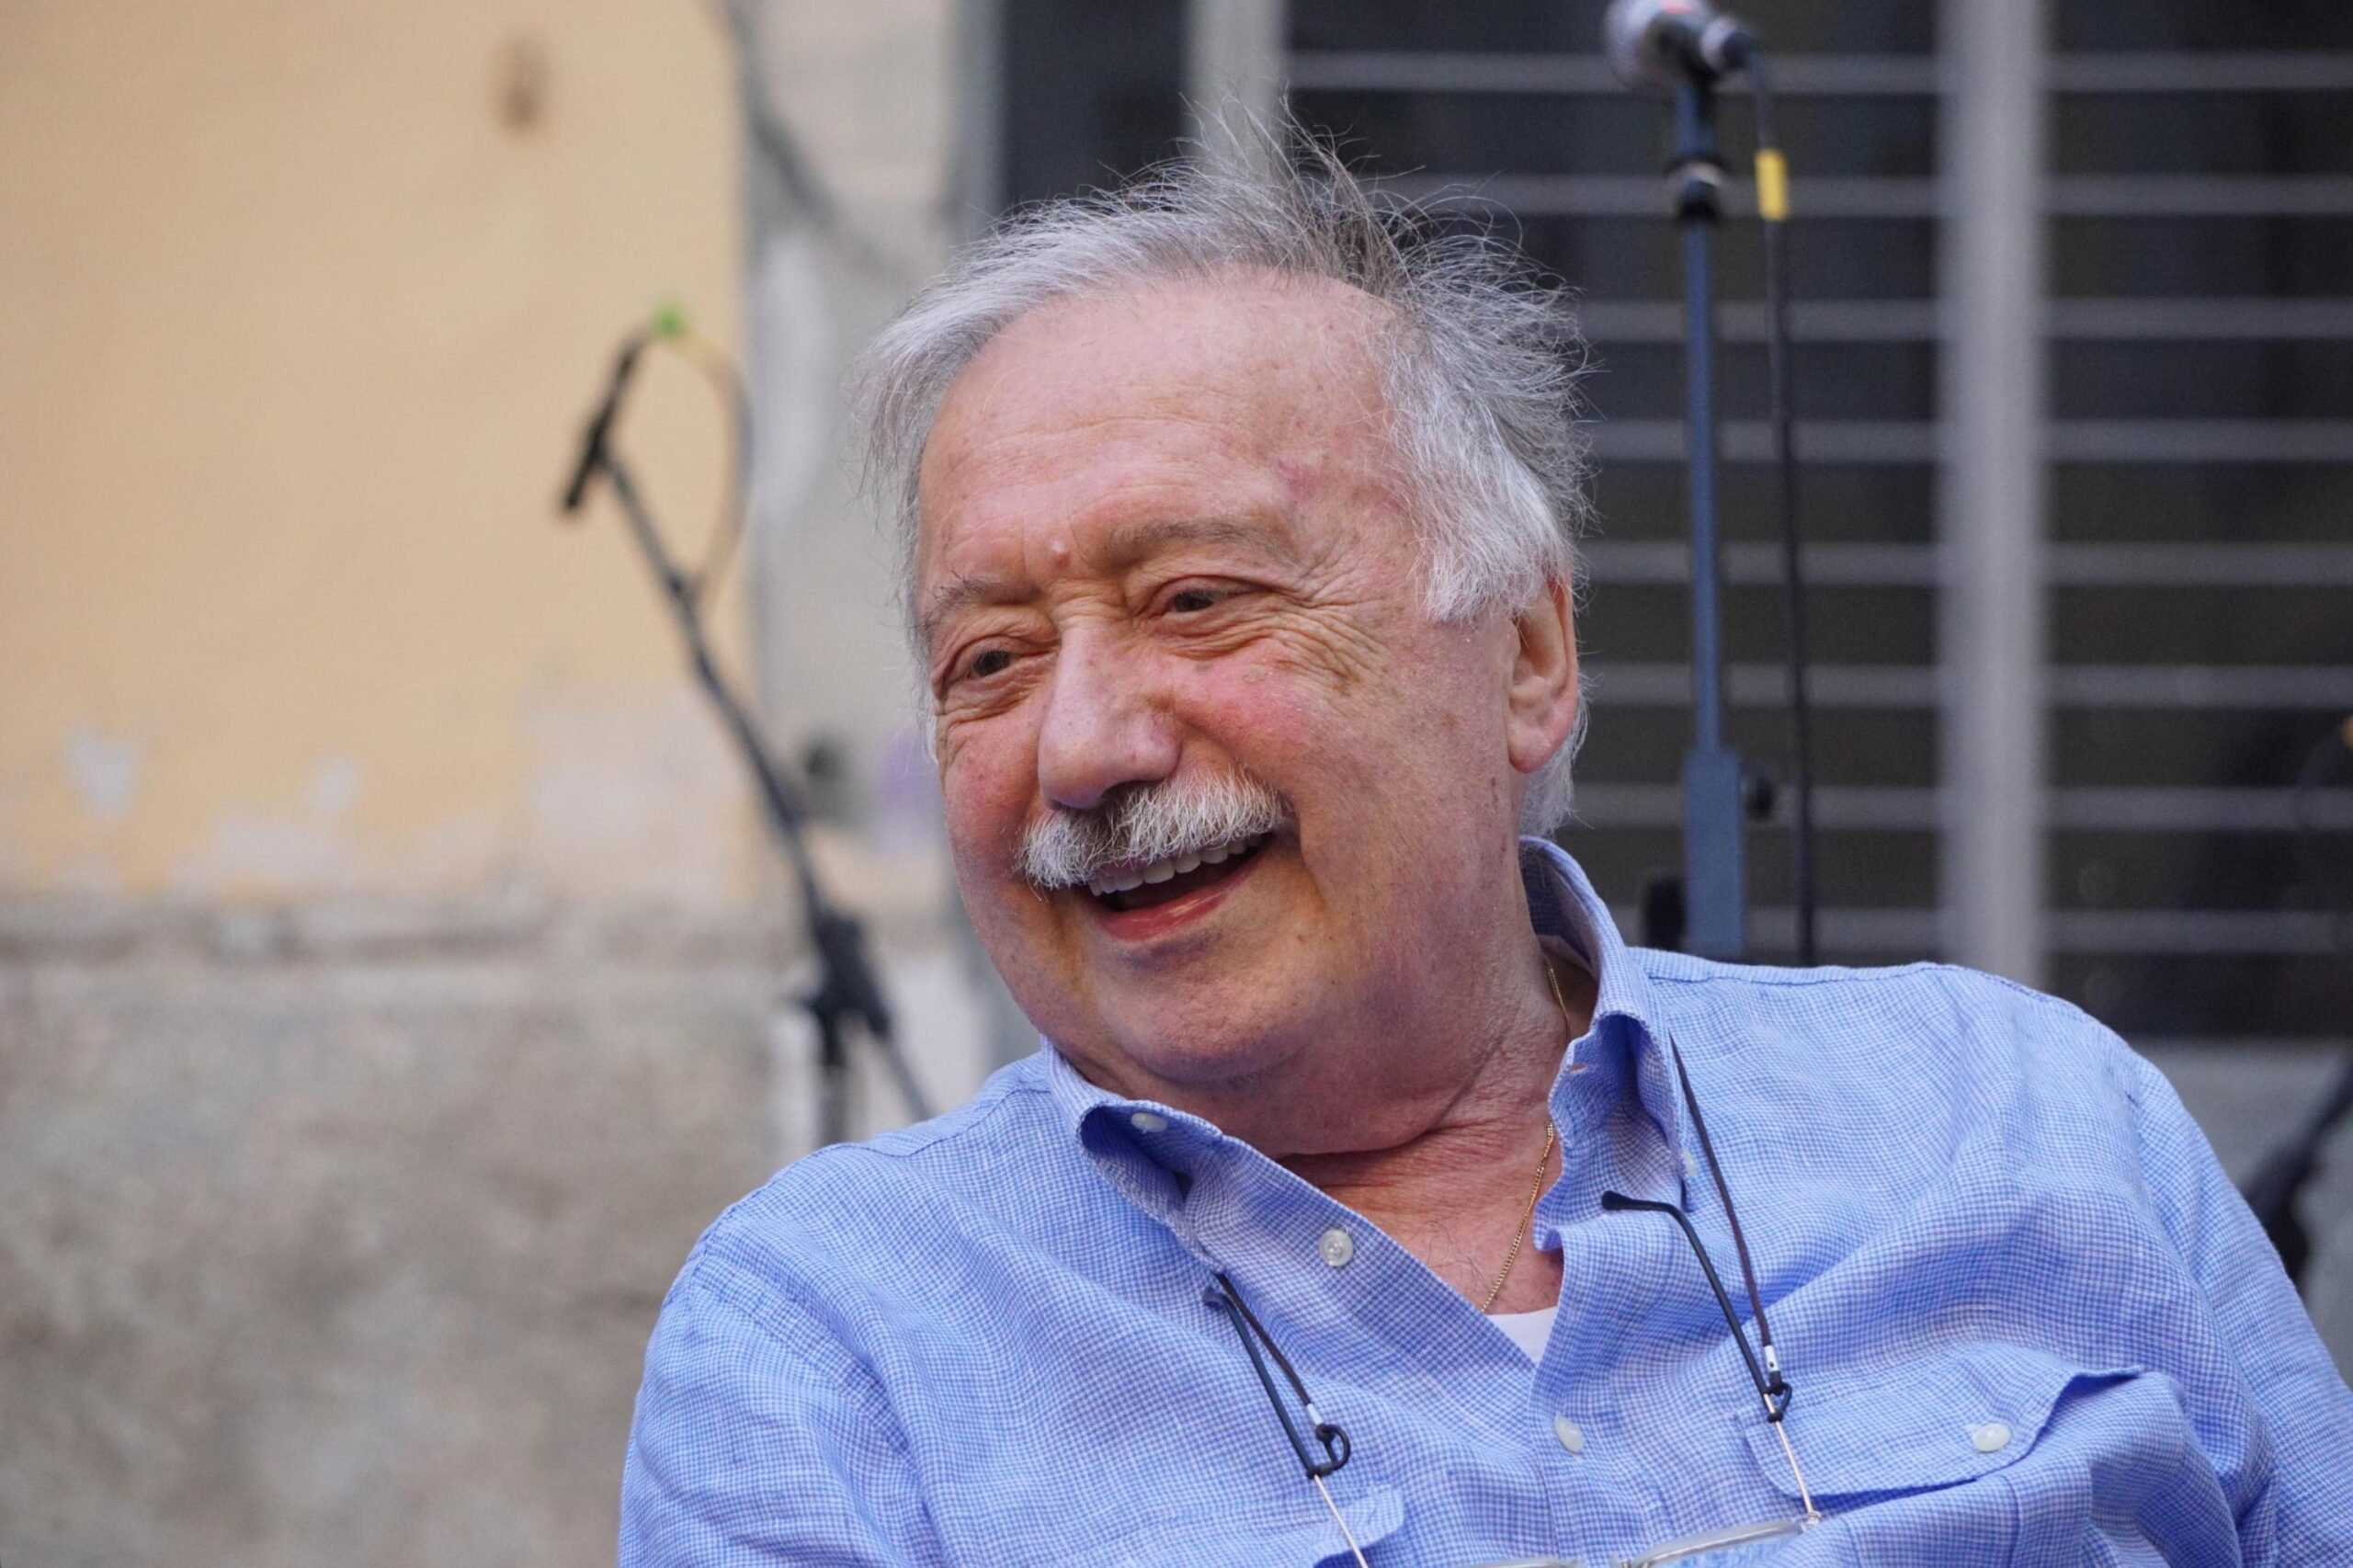 Morto Gianni Minà, il giornalista aveva 84 anni